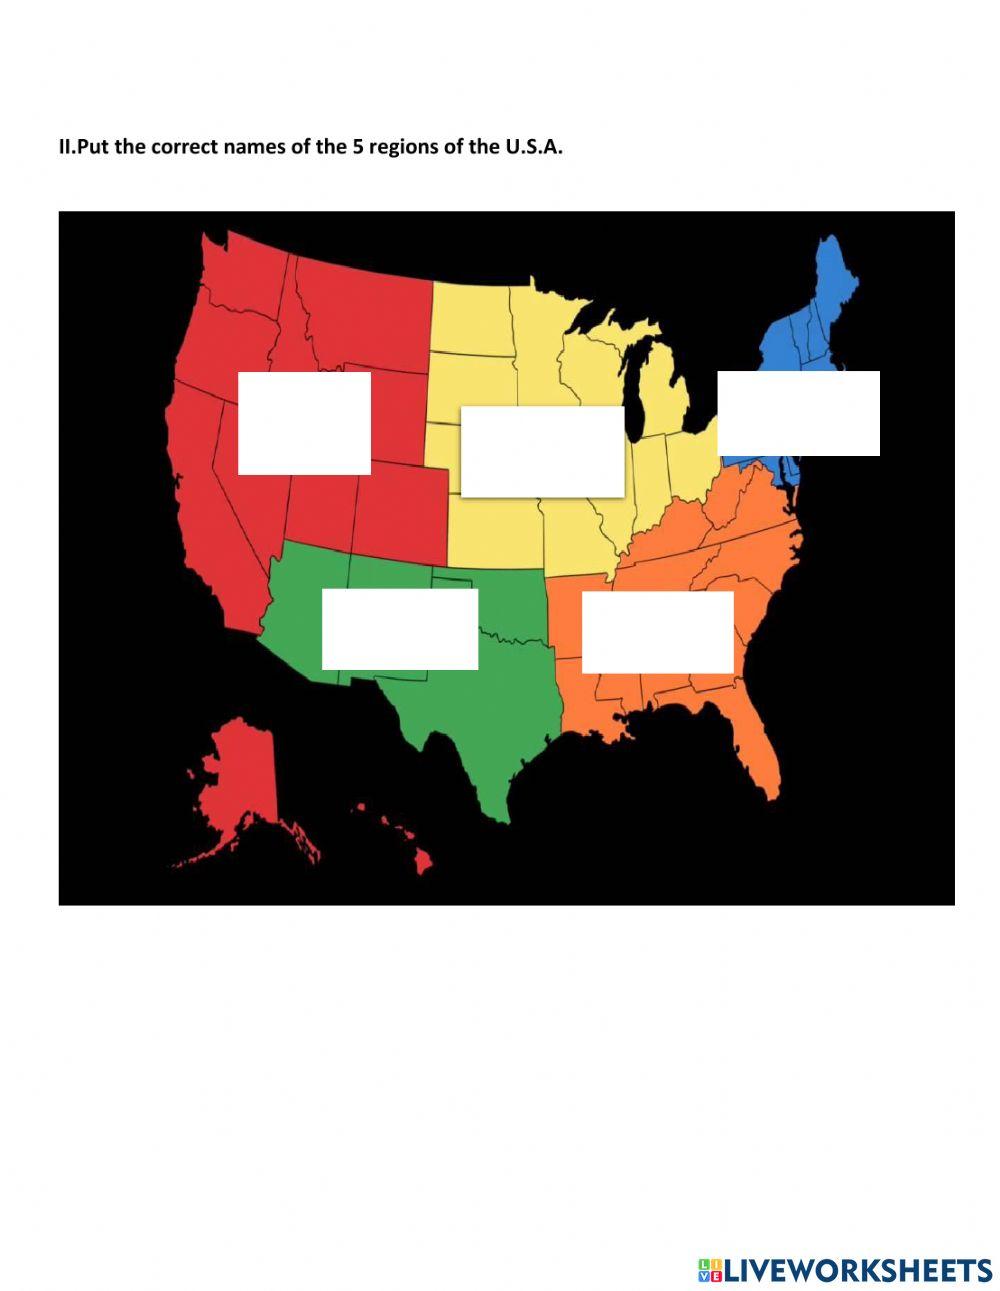 5 regions of U.S.A